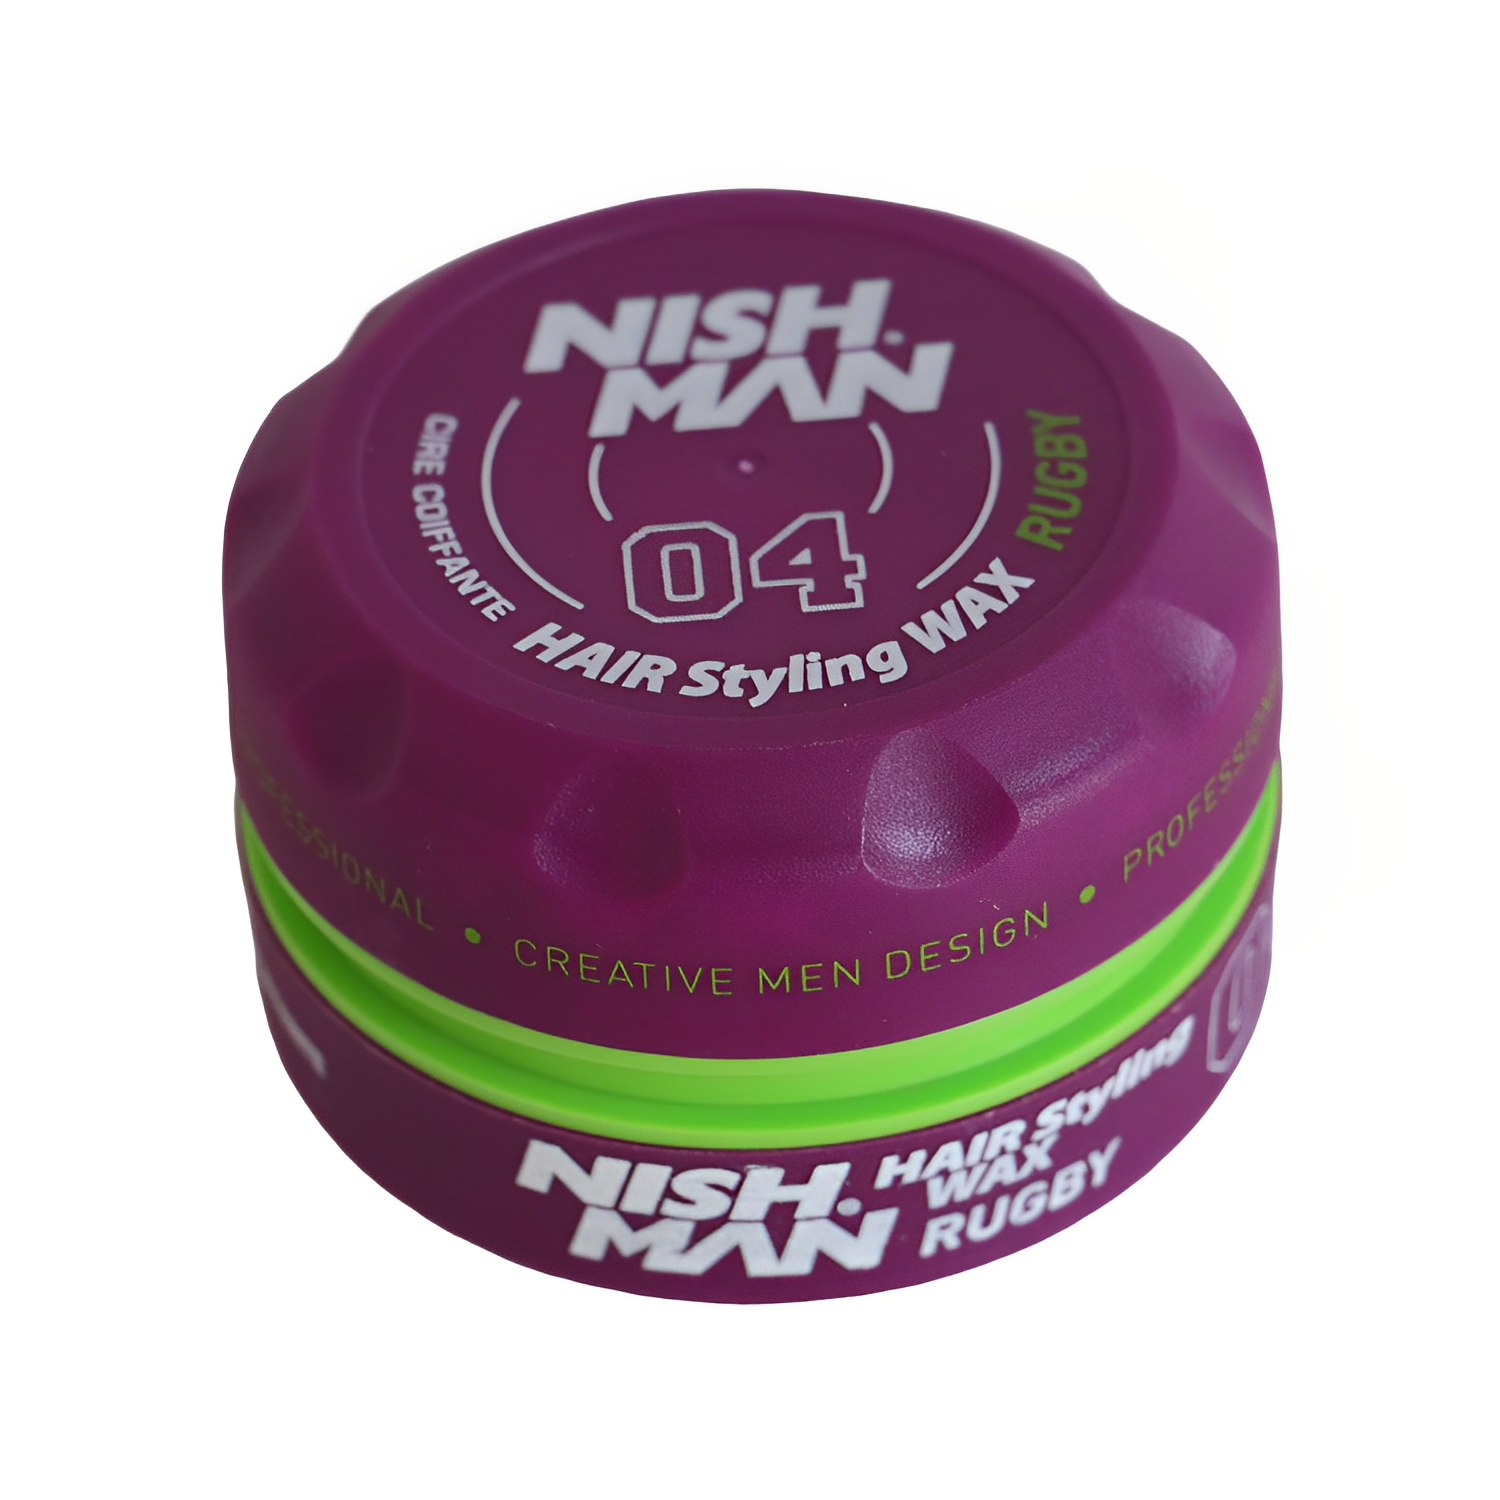 NISHMAN AQUA HAIR STYLING WAX 04 (RUGBY) 150ml